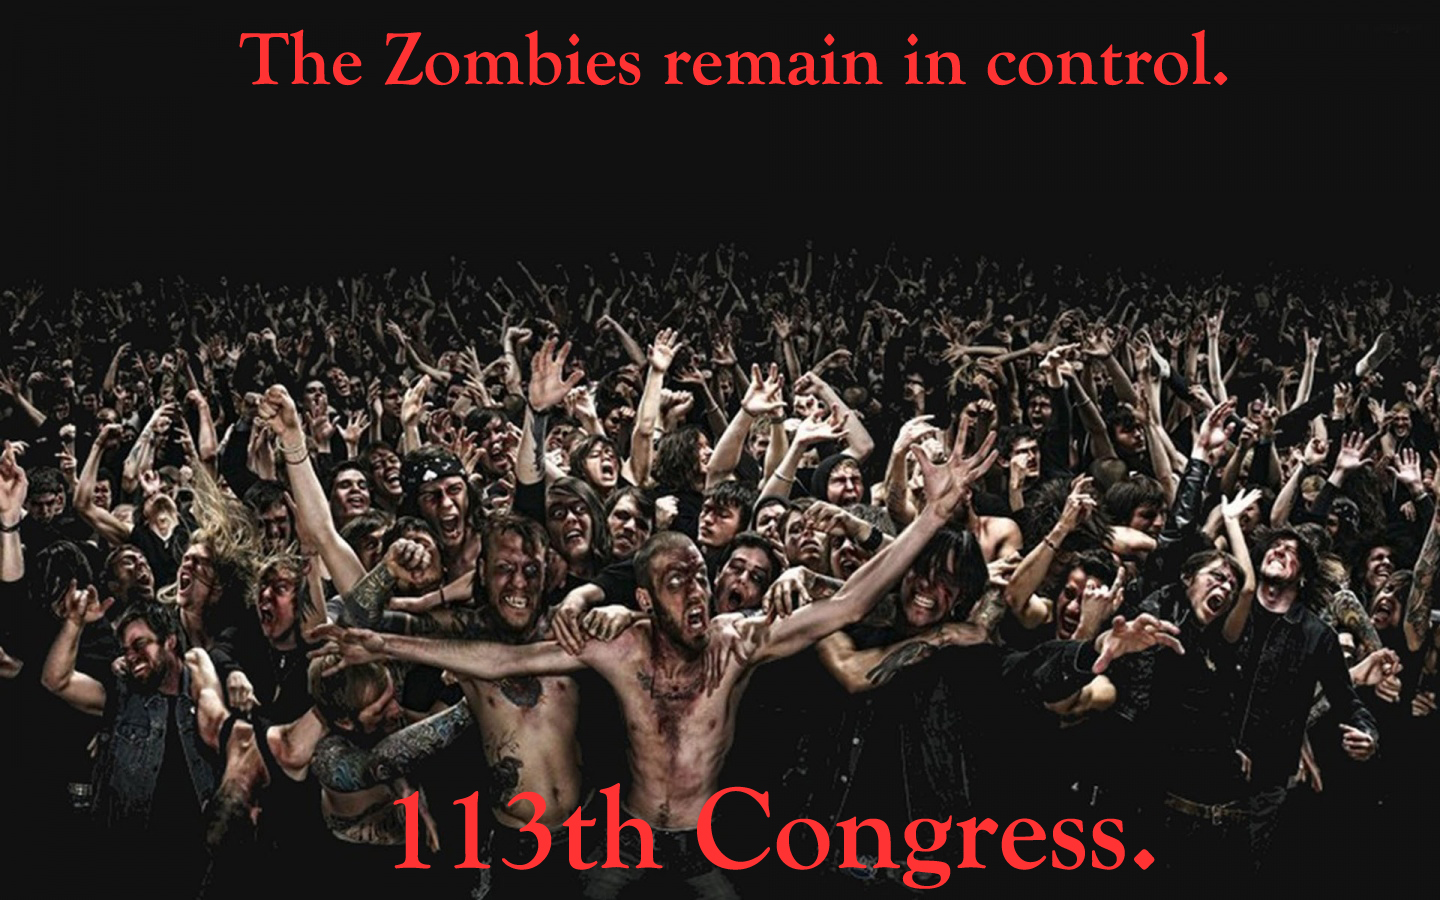 http://4.bp.blogspot.com/-k06mqYRUNek/UZoPY-XcqiI/AAAAAAAASoI/xRK2jPeev44/s1600/zombie_congress.jpg